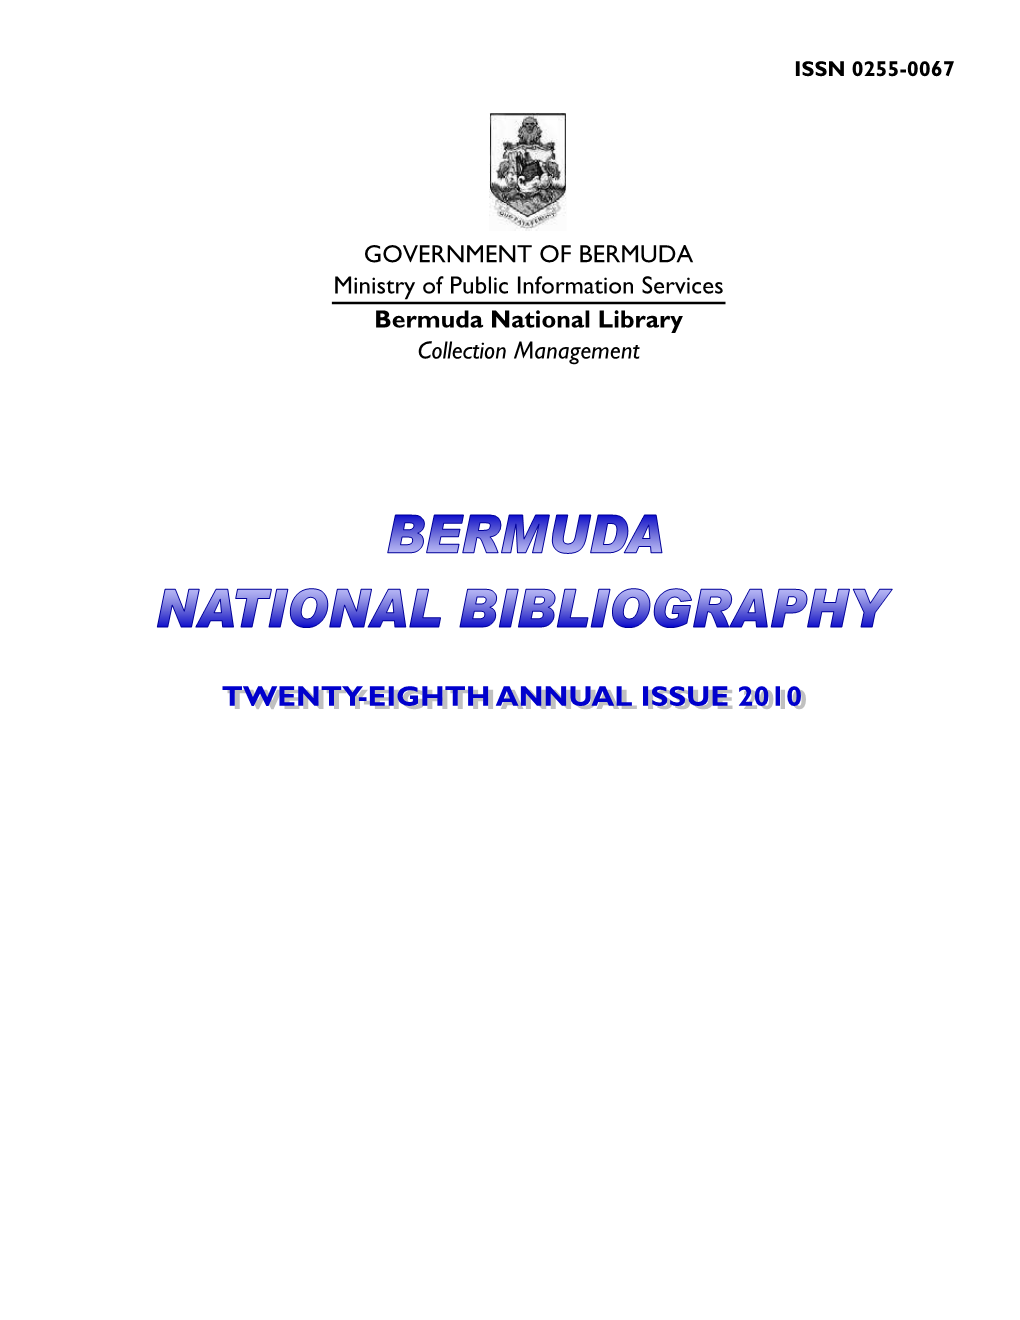 Bermuda National Bibliography.Jan-Mar 2010